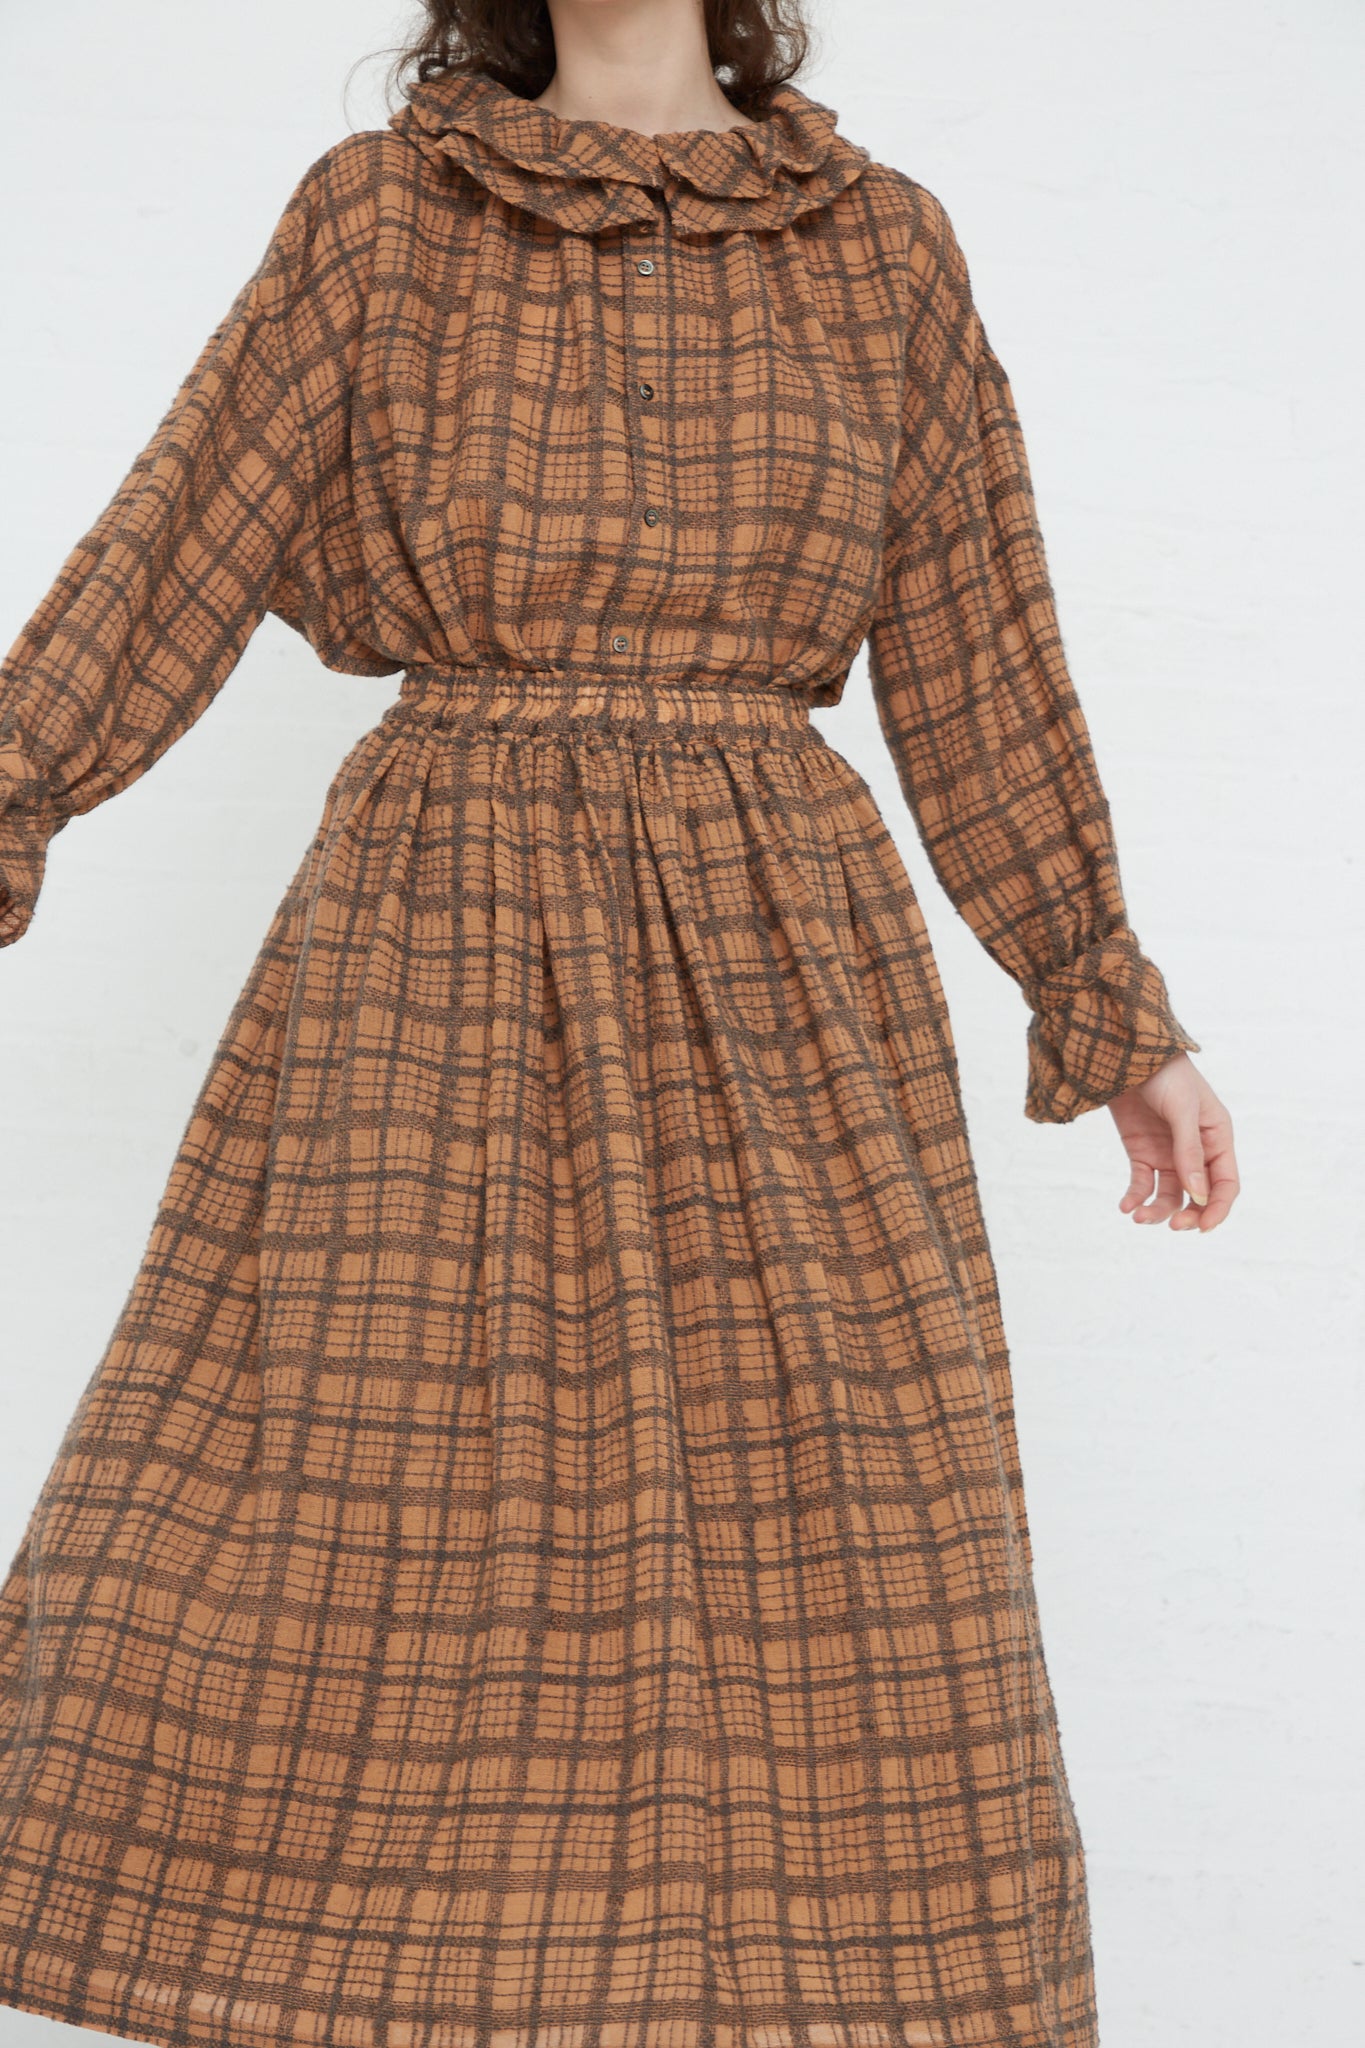 A woman wearing an Ichi Antiquités Woven Wool Check Skirt in Terracotta made of woven check wool fabric.